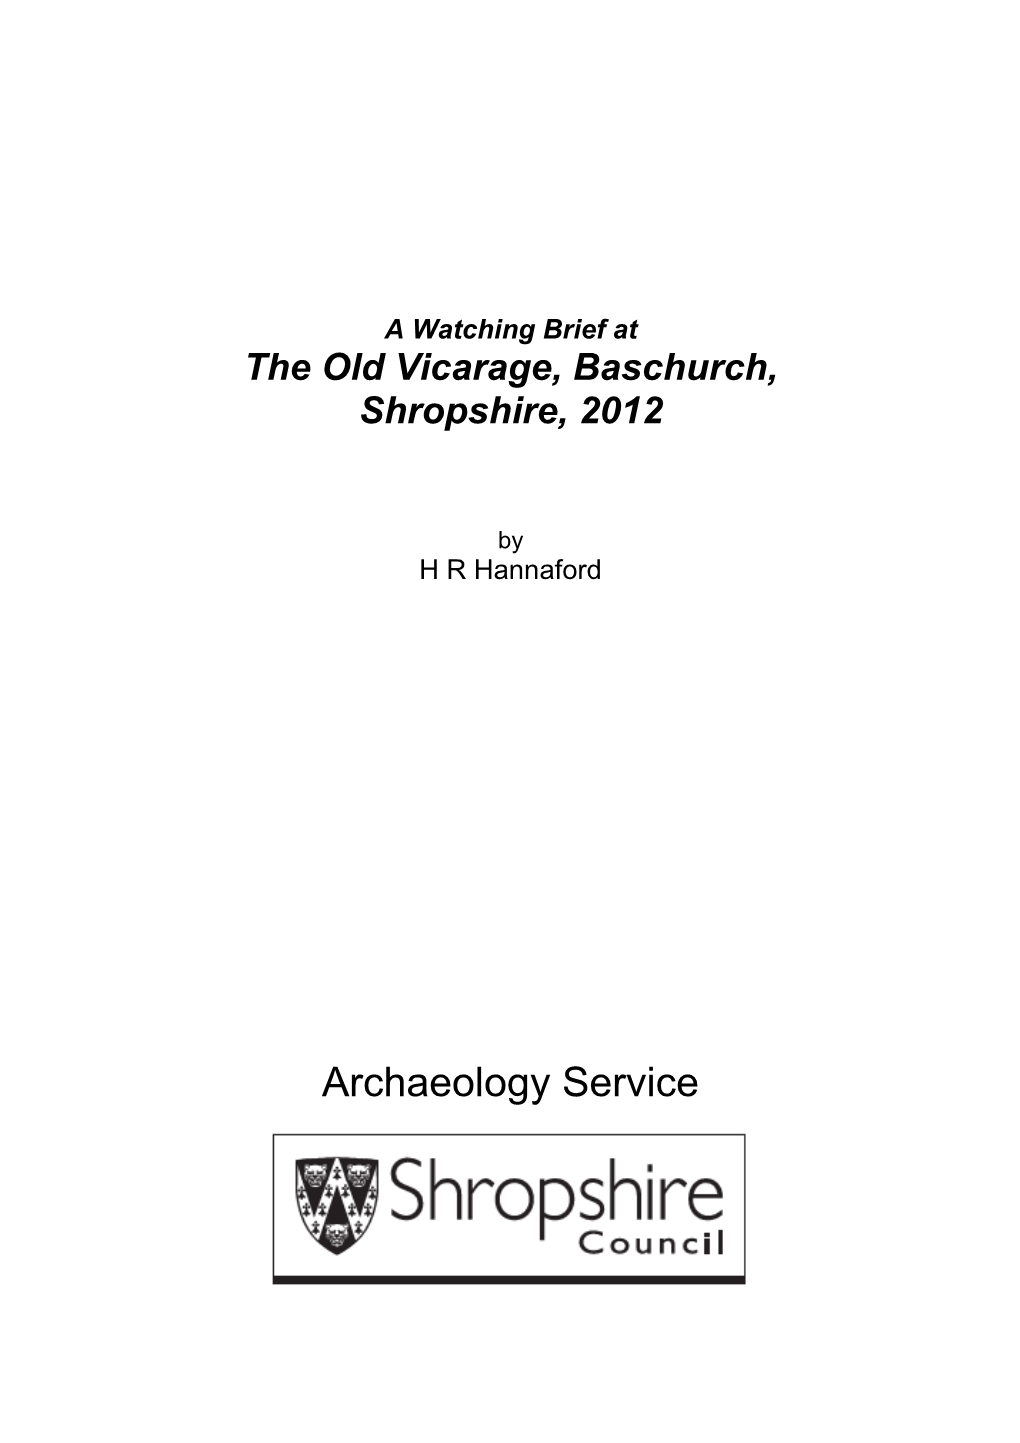 A Watching Brief at the Old Vicarage, Baschurch, Shropshire, 2012